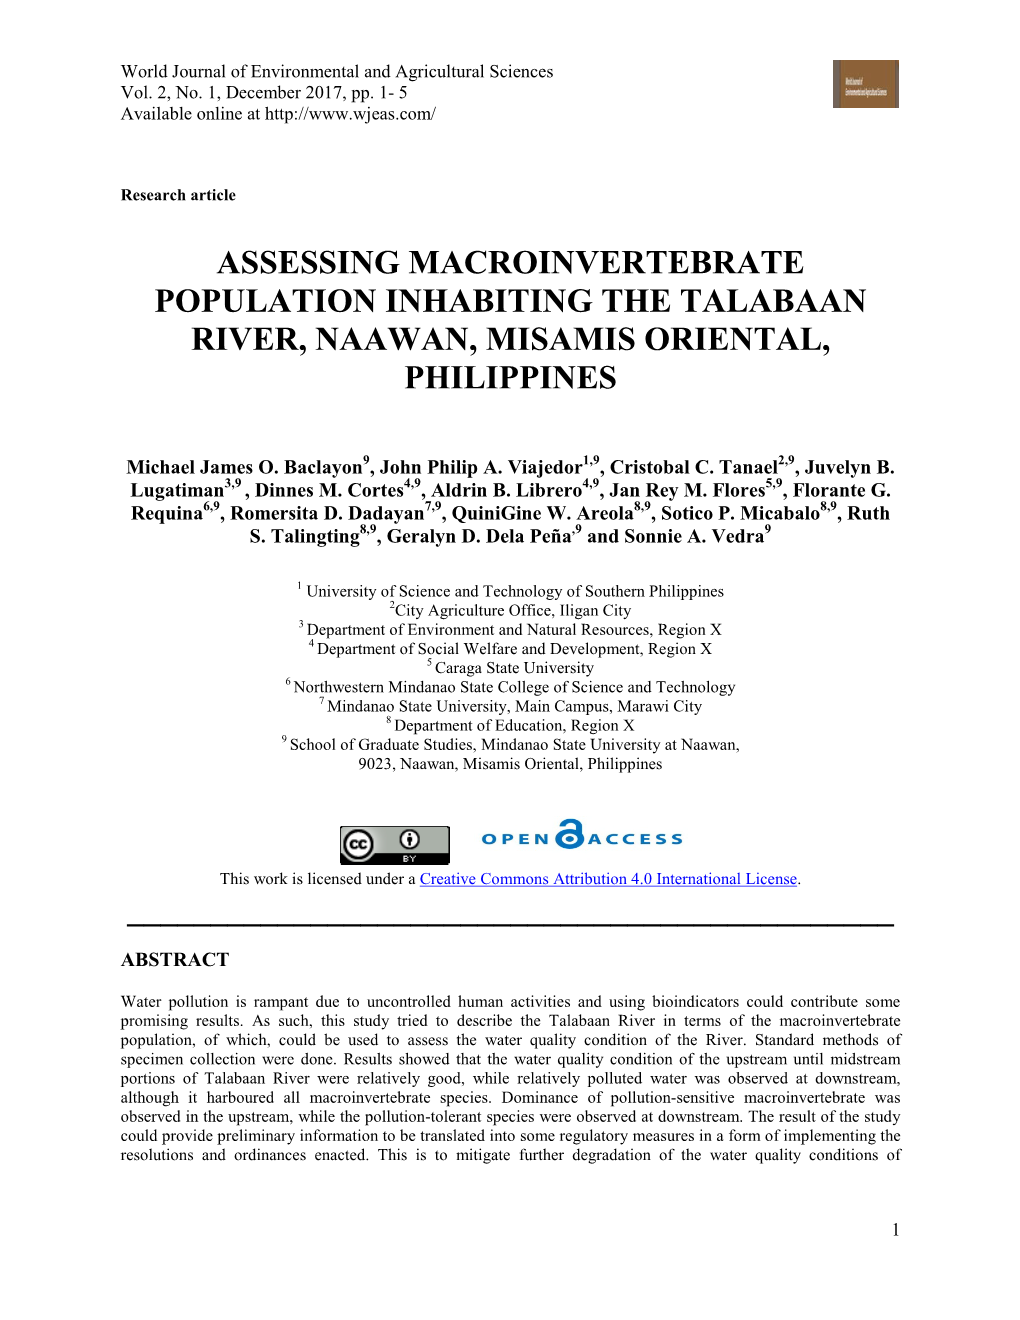 Assessing Macroinvertebrate Population Inhabiting the Talabaan River, Naawan, Misamis Oriental, Philippines